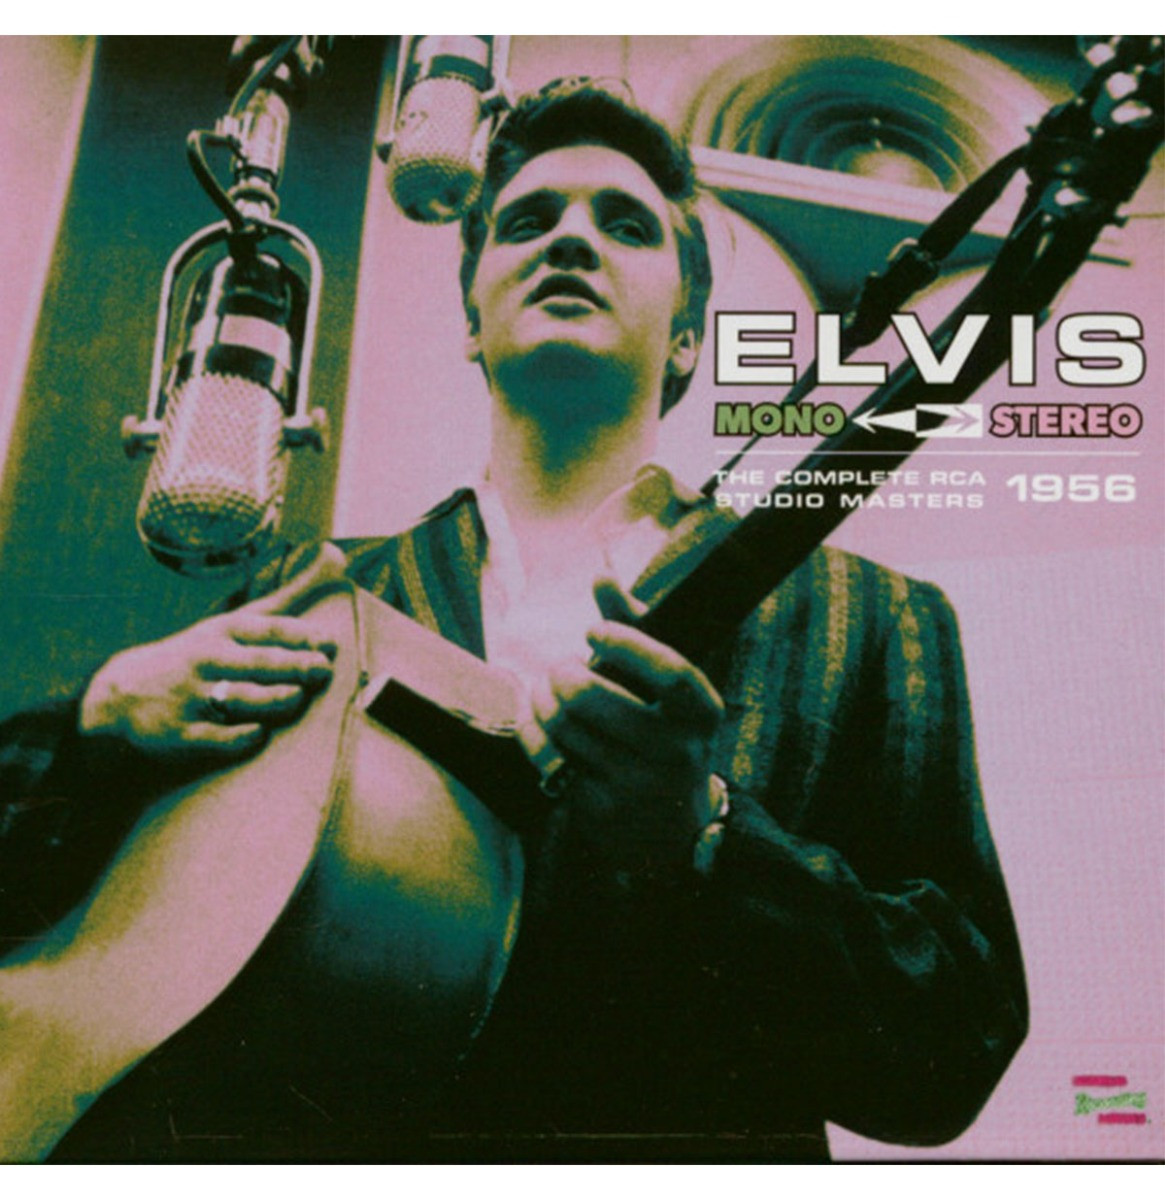 Elvis Presley - Mono To Stereo - The Complete RCA Studio Masters 1956 2CD